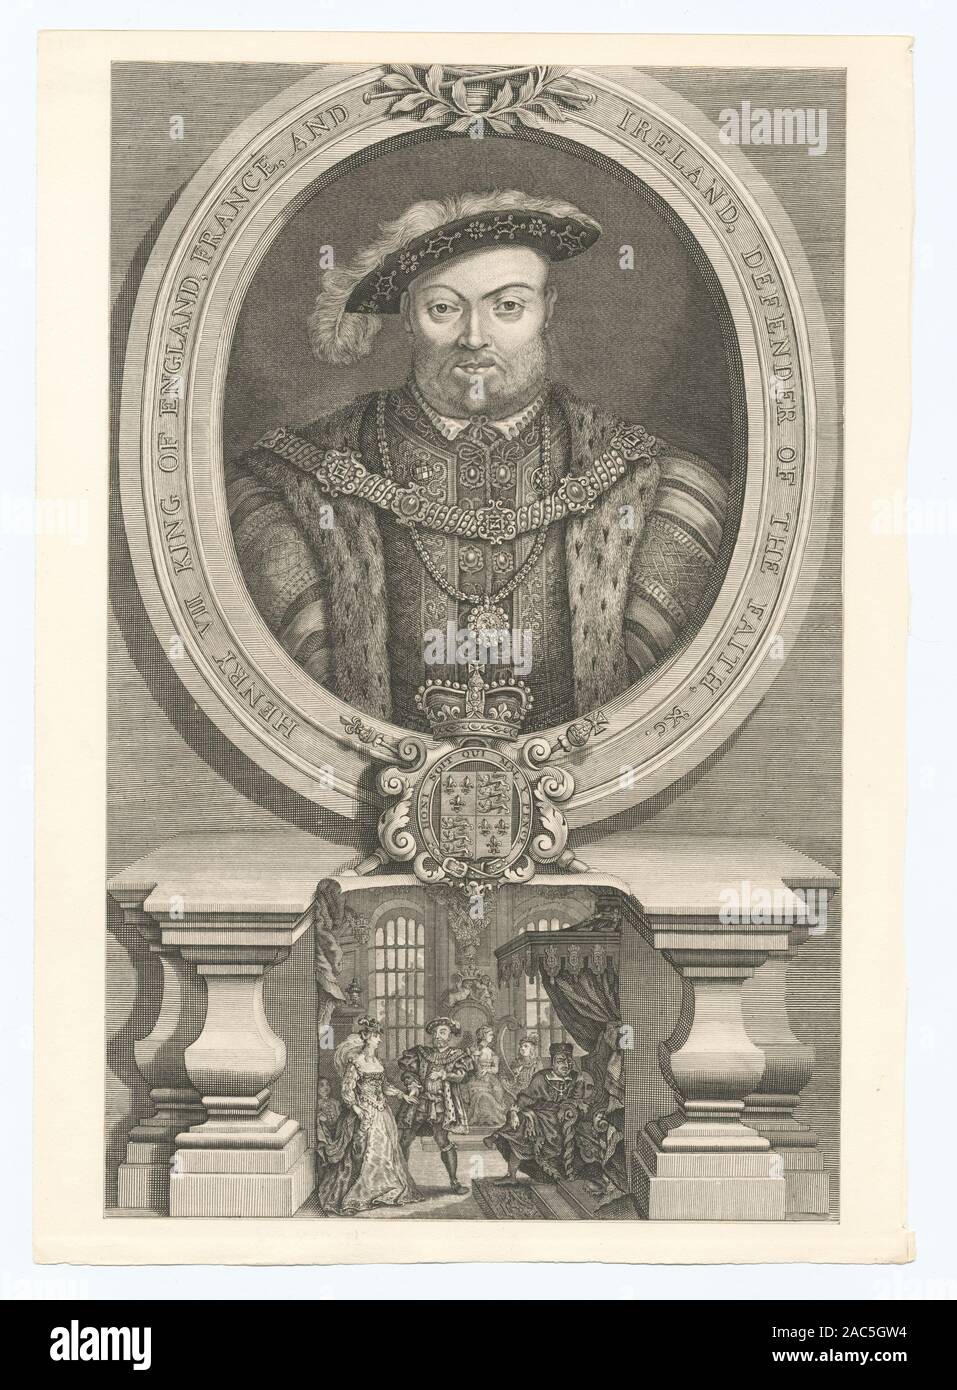 Henry VIII re d'Inghilterra, Francia e Irlanda, difensore della fede, etc EM3915; Enrico VIII re d'Inghilterra, Francia e Irlanda, difensore della fede, ecc. Foto Stock